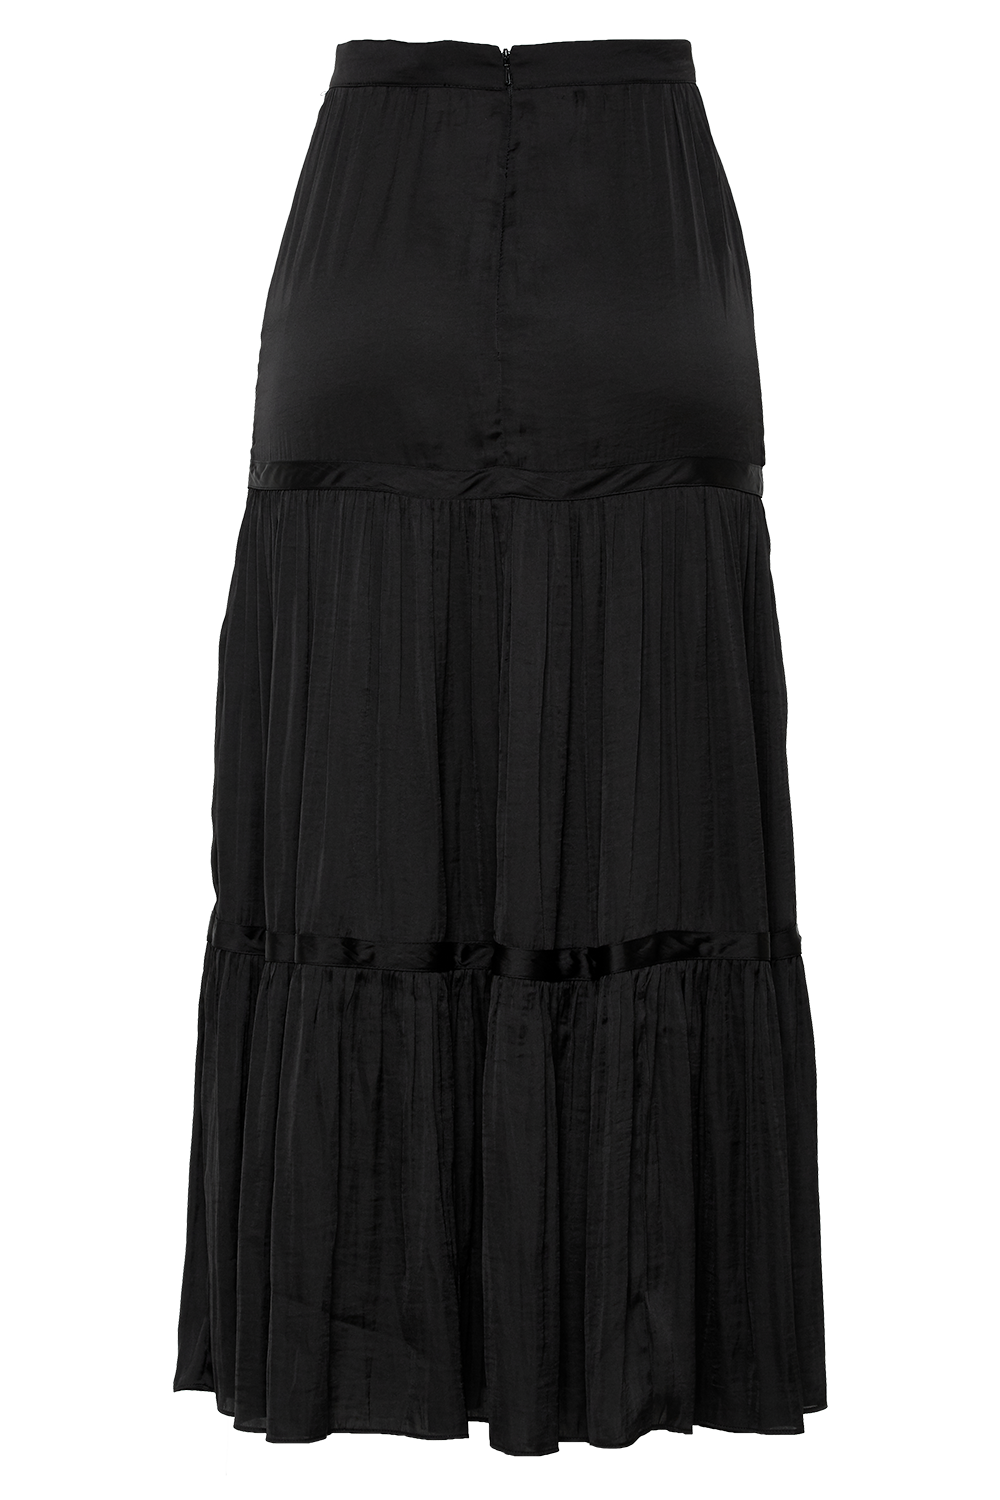 Long Black Skirt Png | ubicaciondepersonas.cdmx.gob.mx